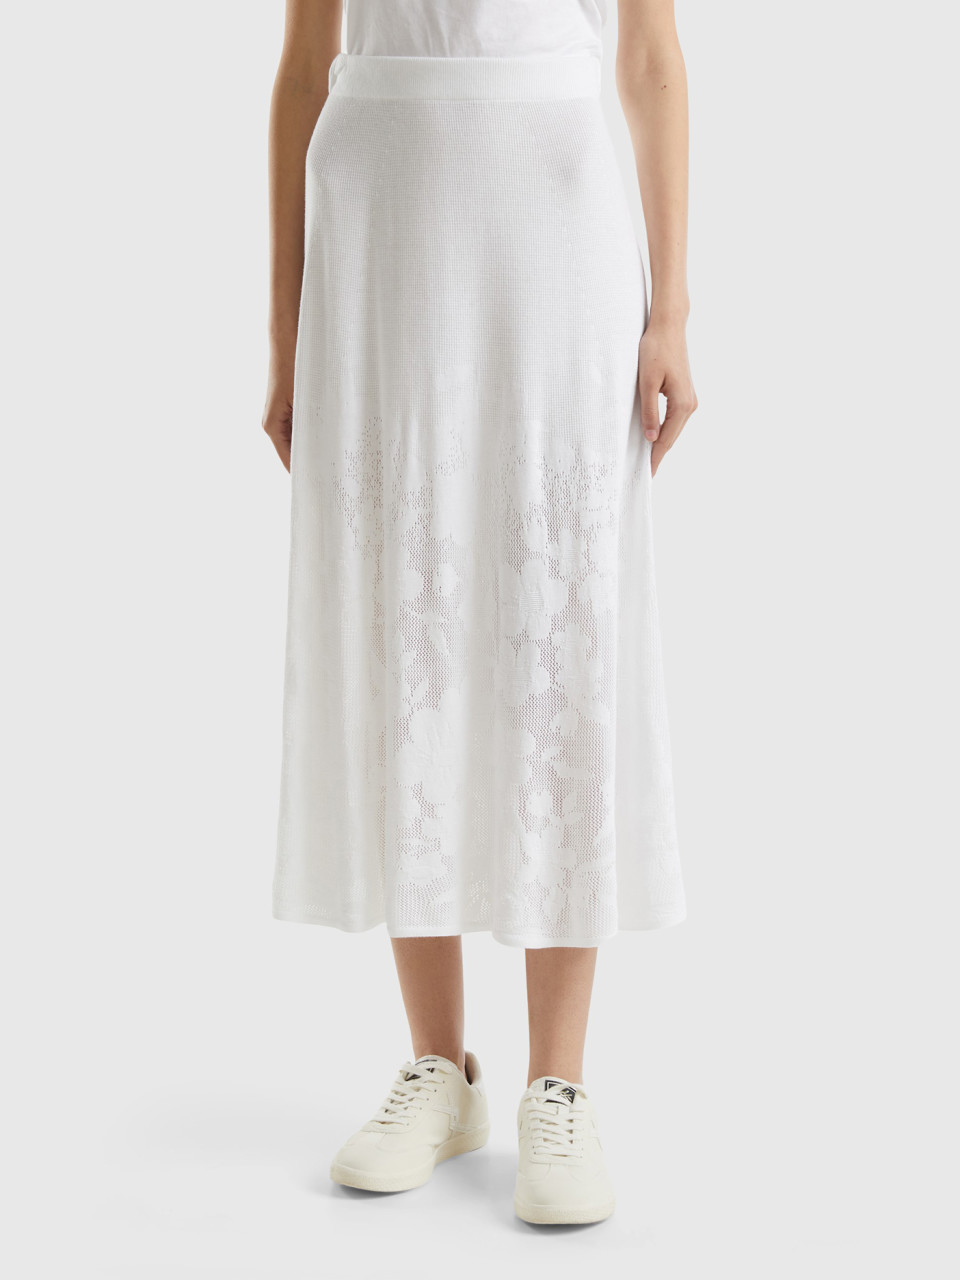 Benetton, Skirt With Floral Motif, White, Women